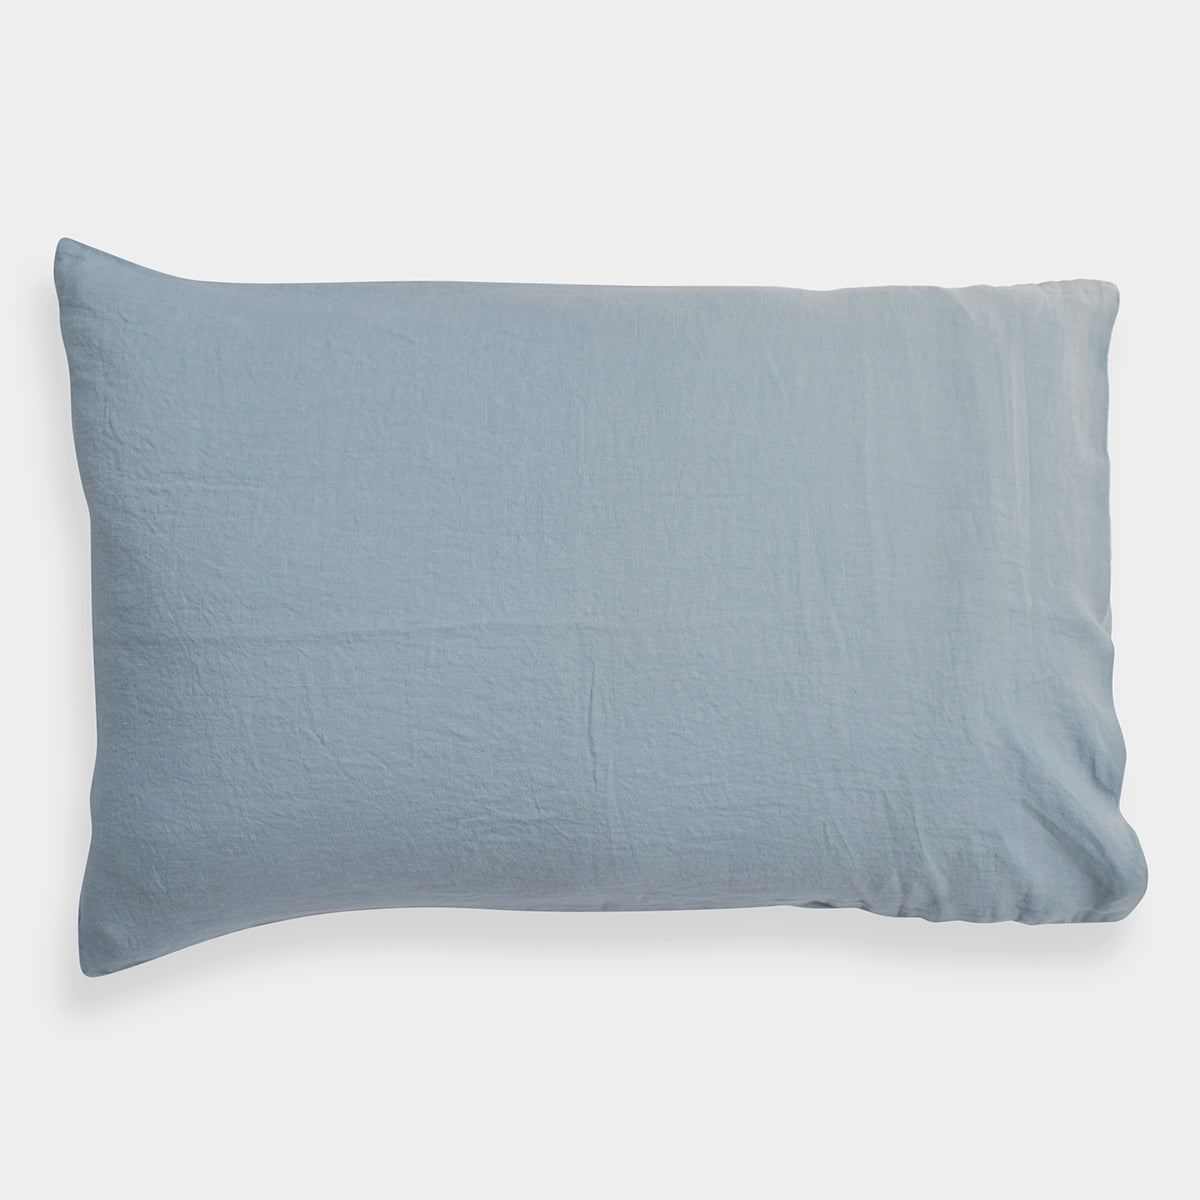 Linge Particulier Scandinavian Blue Standard Linen Pillowcase Sham for a colorful linen bedding look in grey blue - Collyer&#39;s Mansion